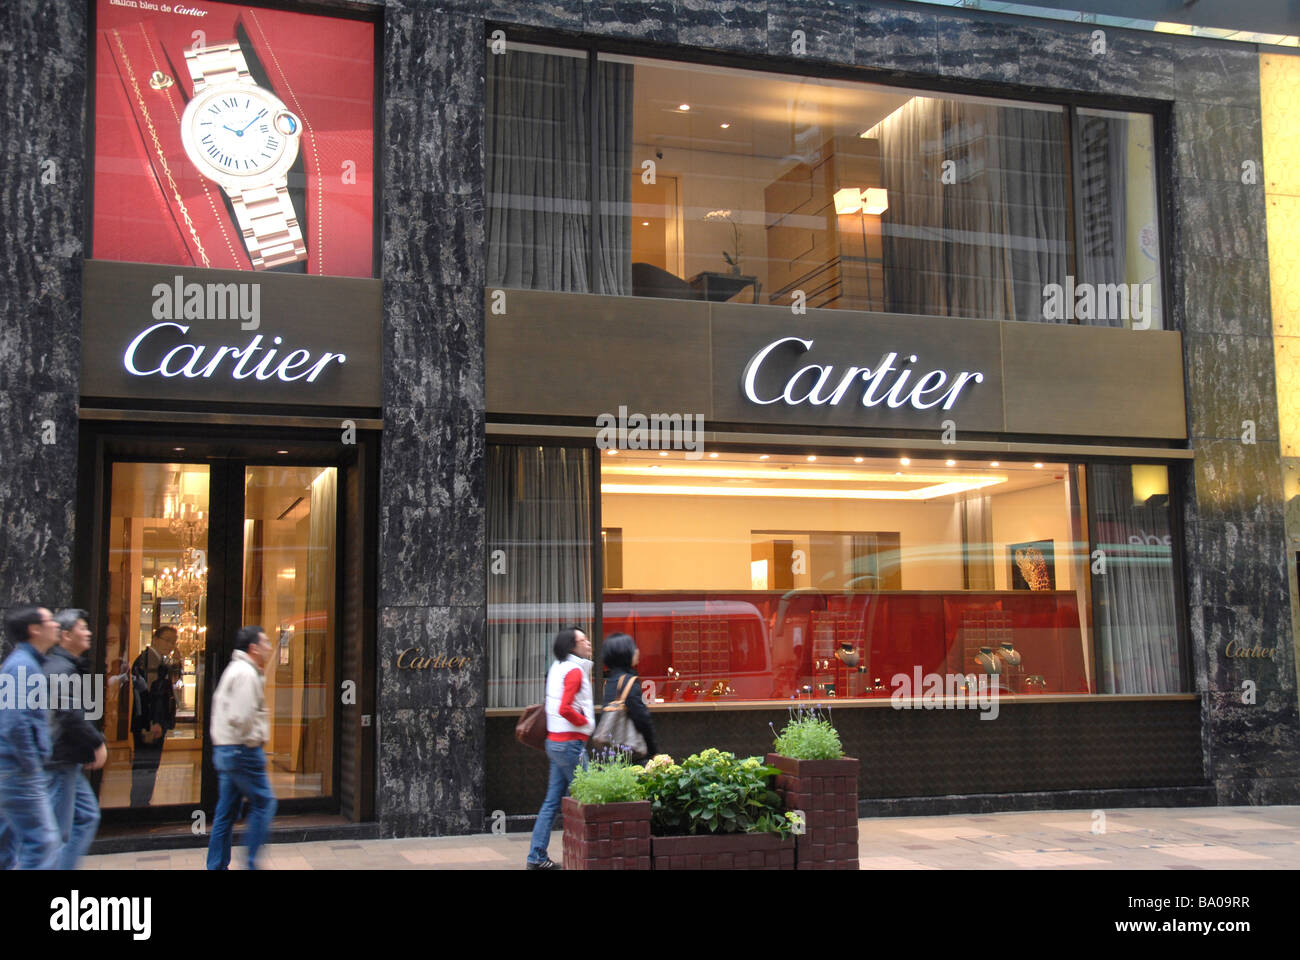 cartier store